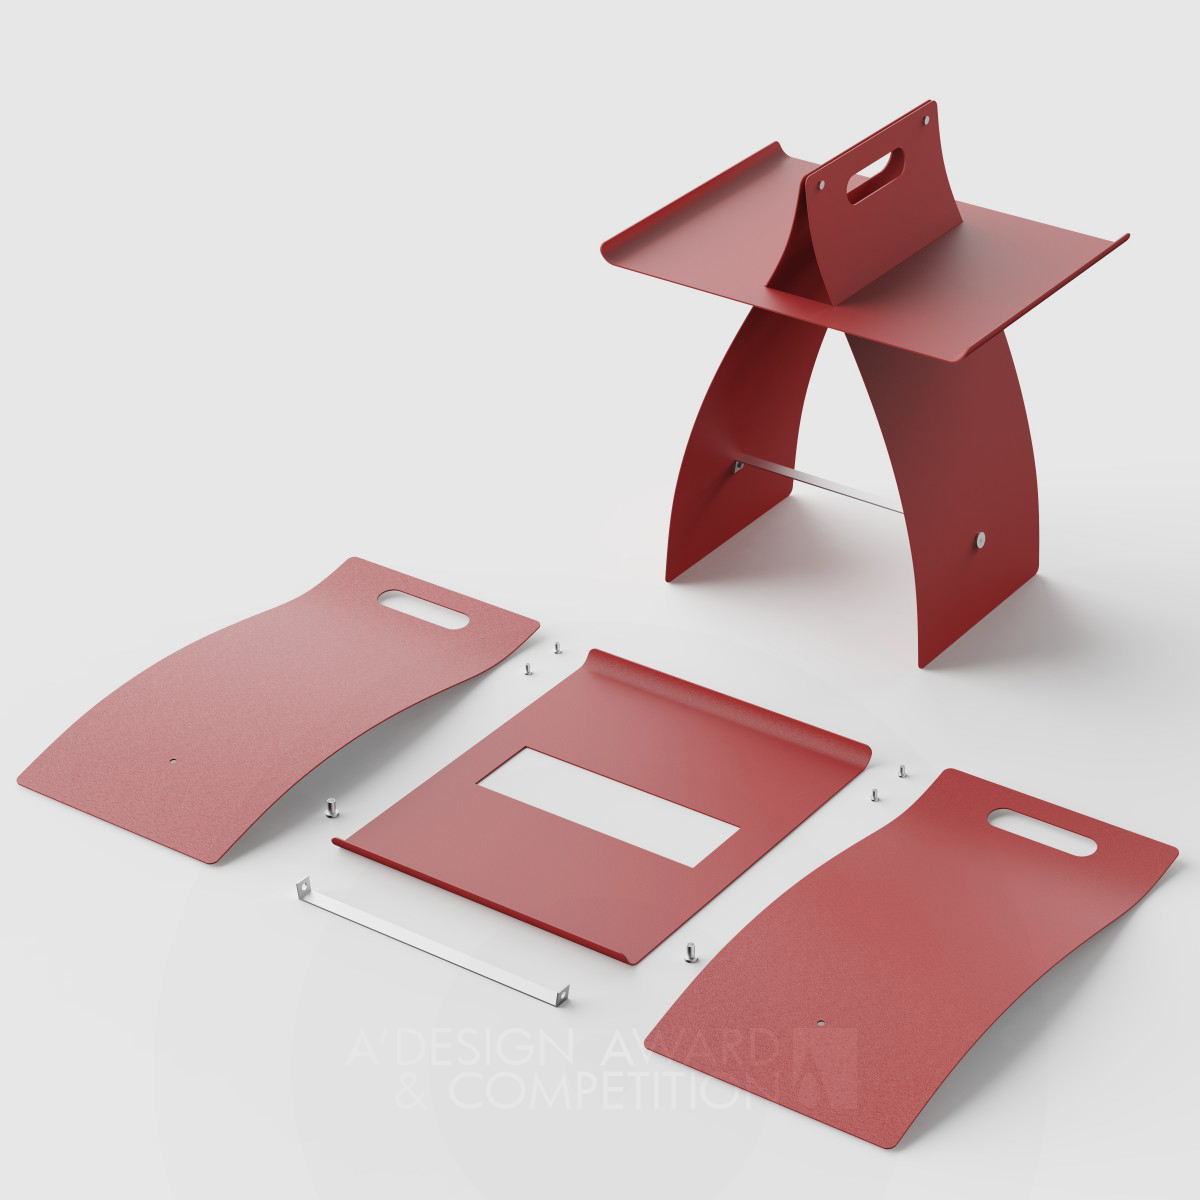 Revolutionizing Furniture Design: The Tai Side Table